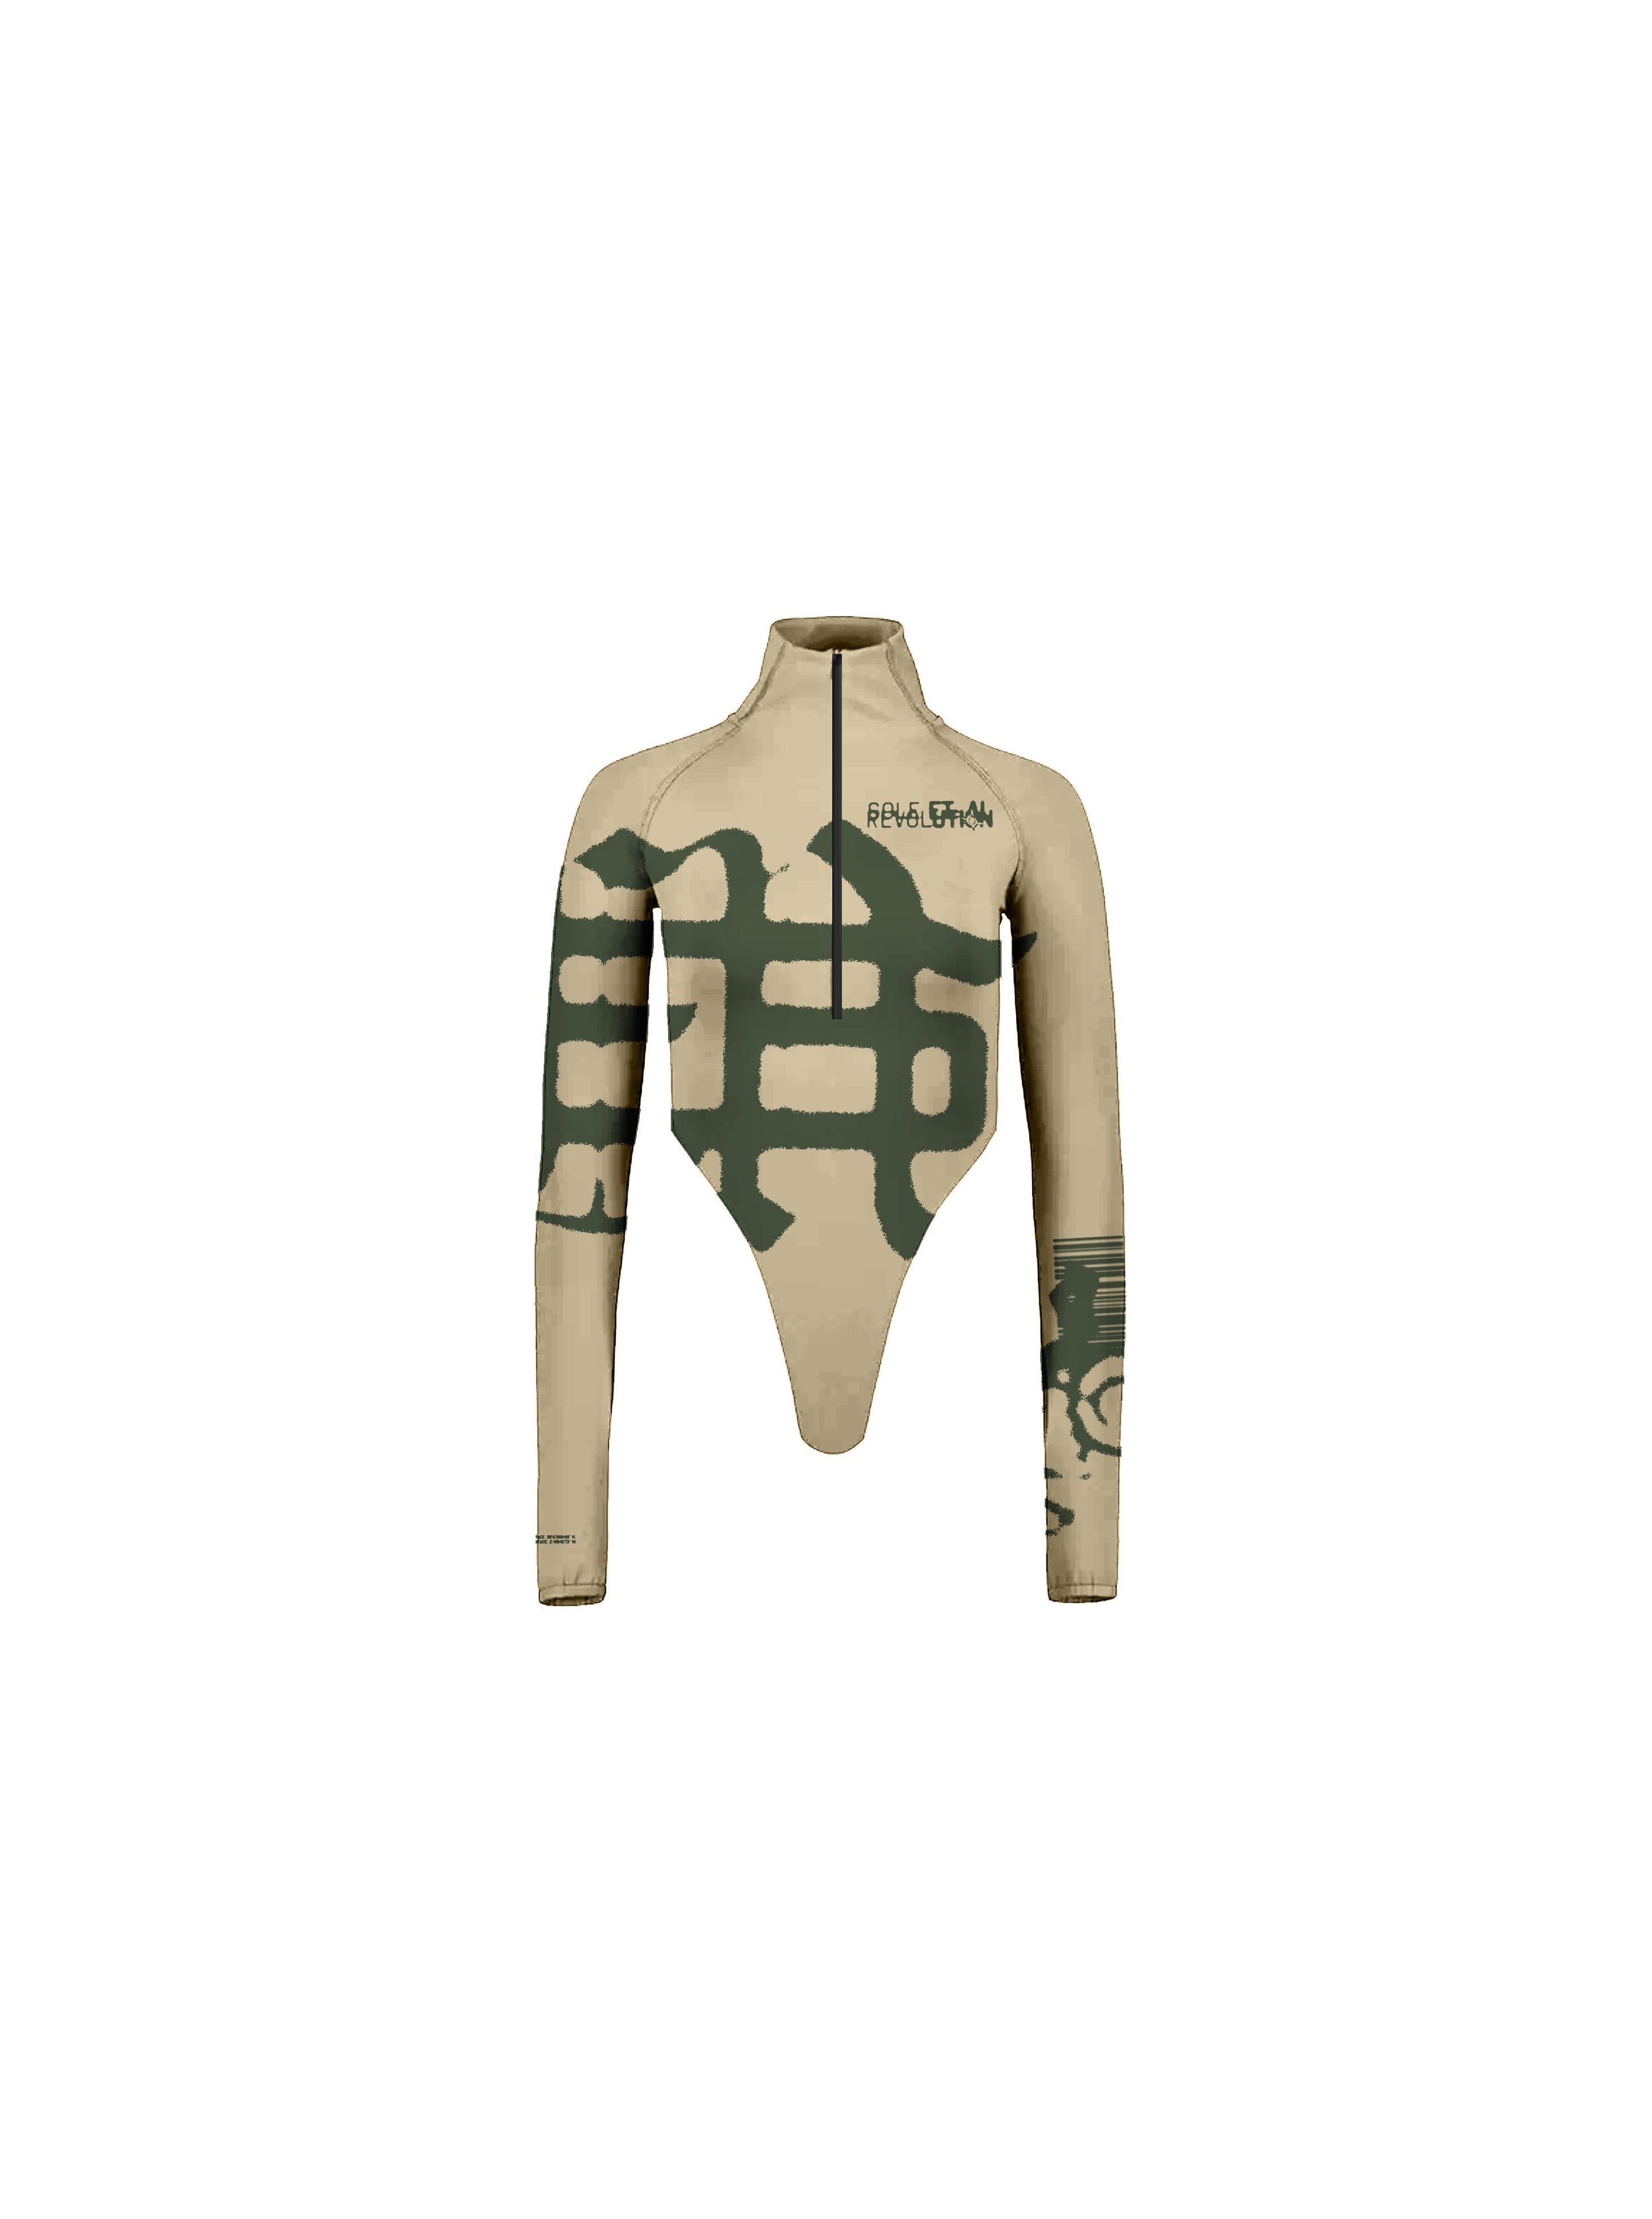 Sole et. Al Revølutiøn Zip Bodysuit : Sand / Militærgrøn